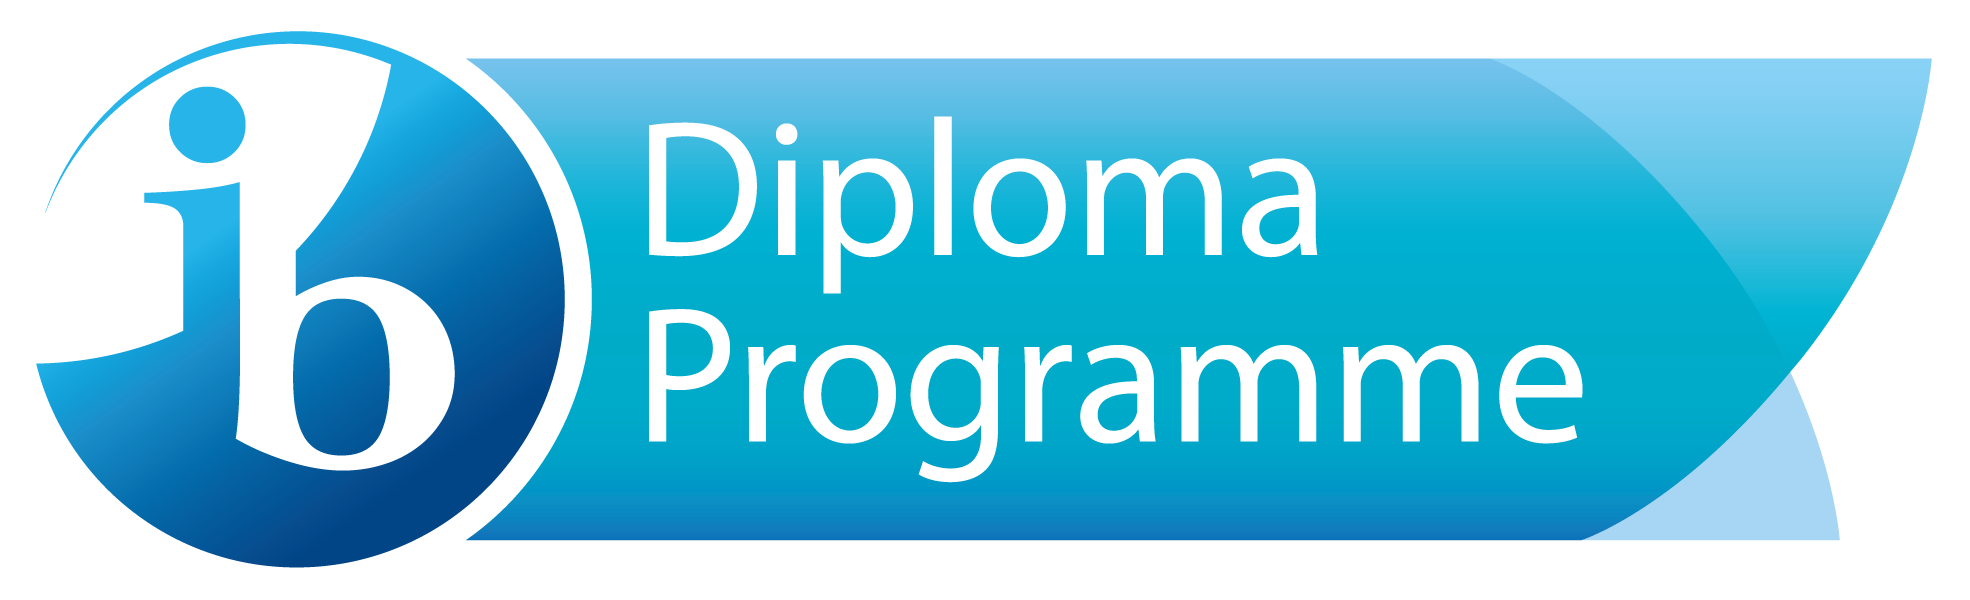 dp-programme-logo-en-1